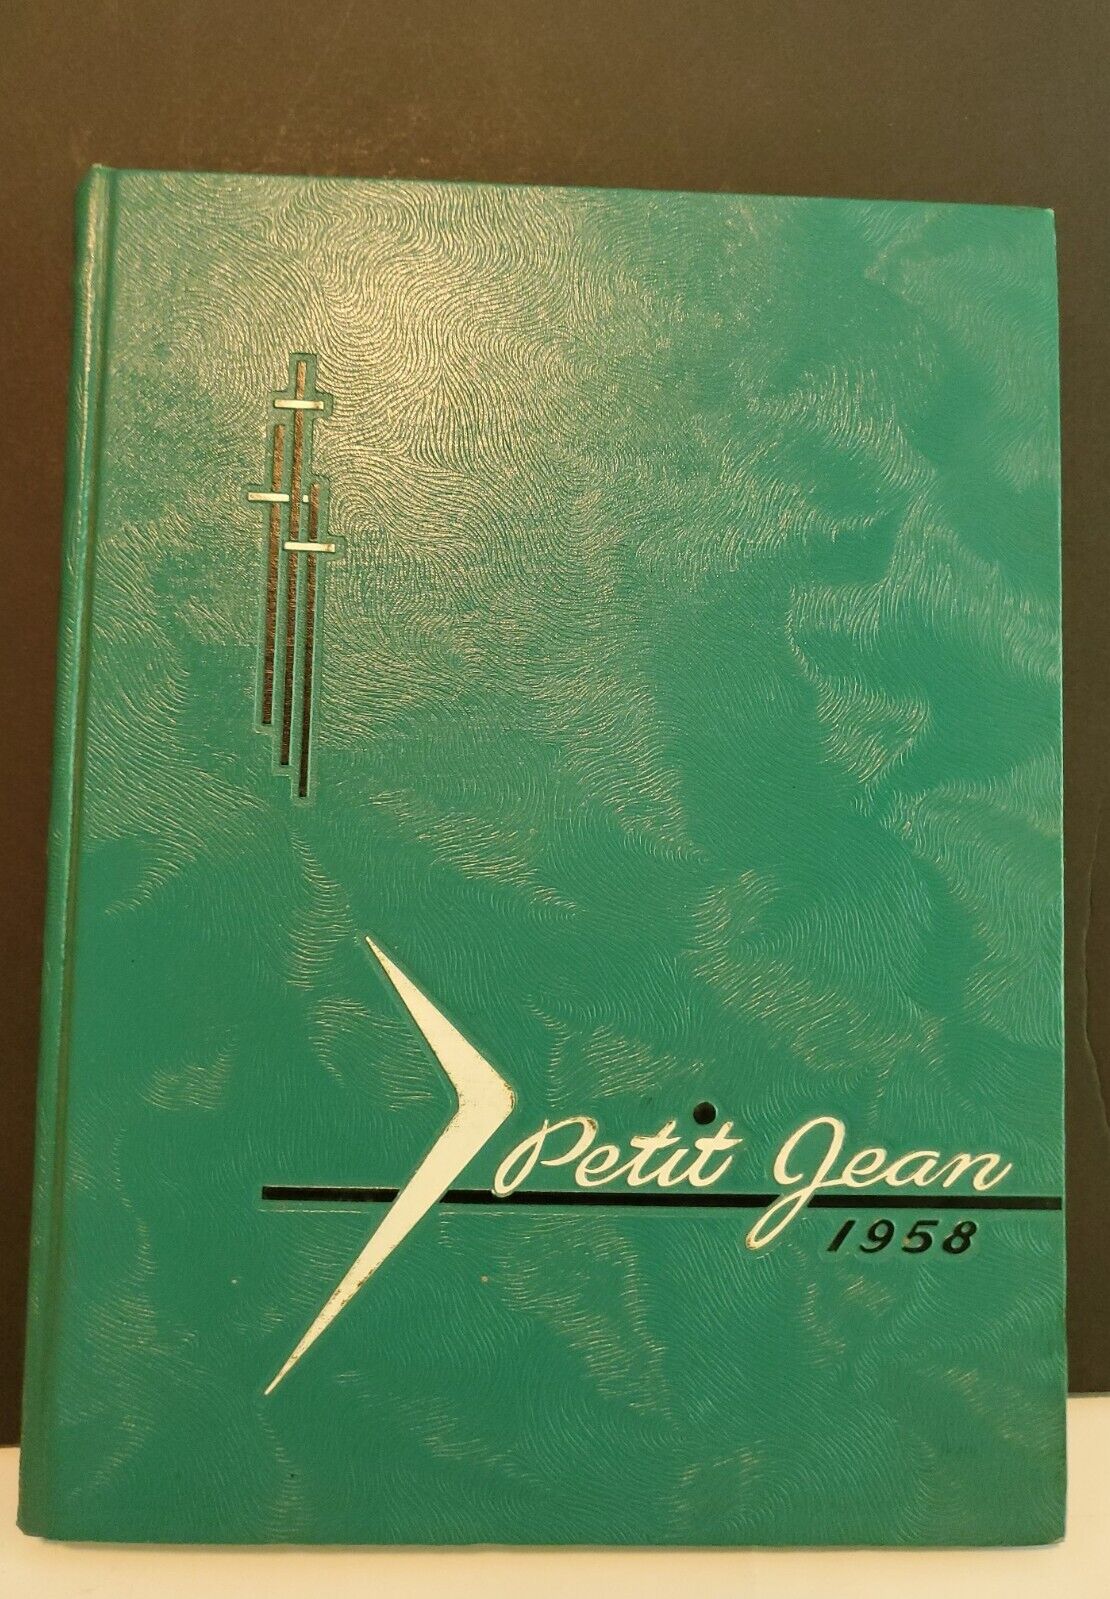 1958 Harding College PETIT JEAN, Searcy, Arkansas Volume XXXIV